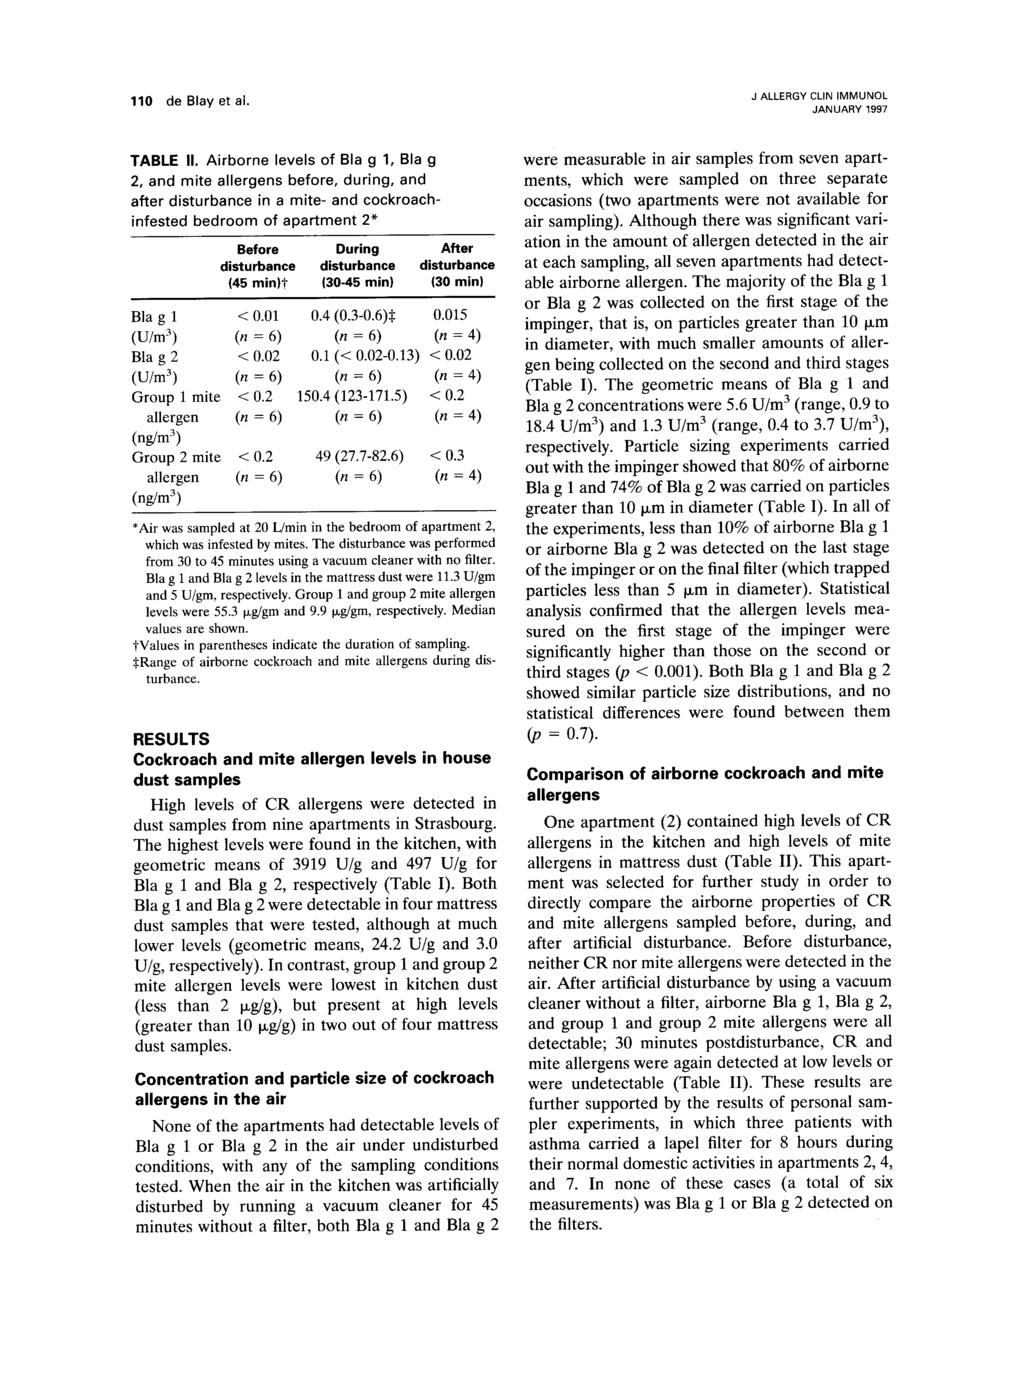 110 de Blay et al. J ALLERGY CLIN IMMUNOL JANUARY 1997 TABLE II.